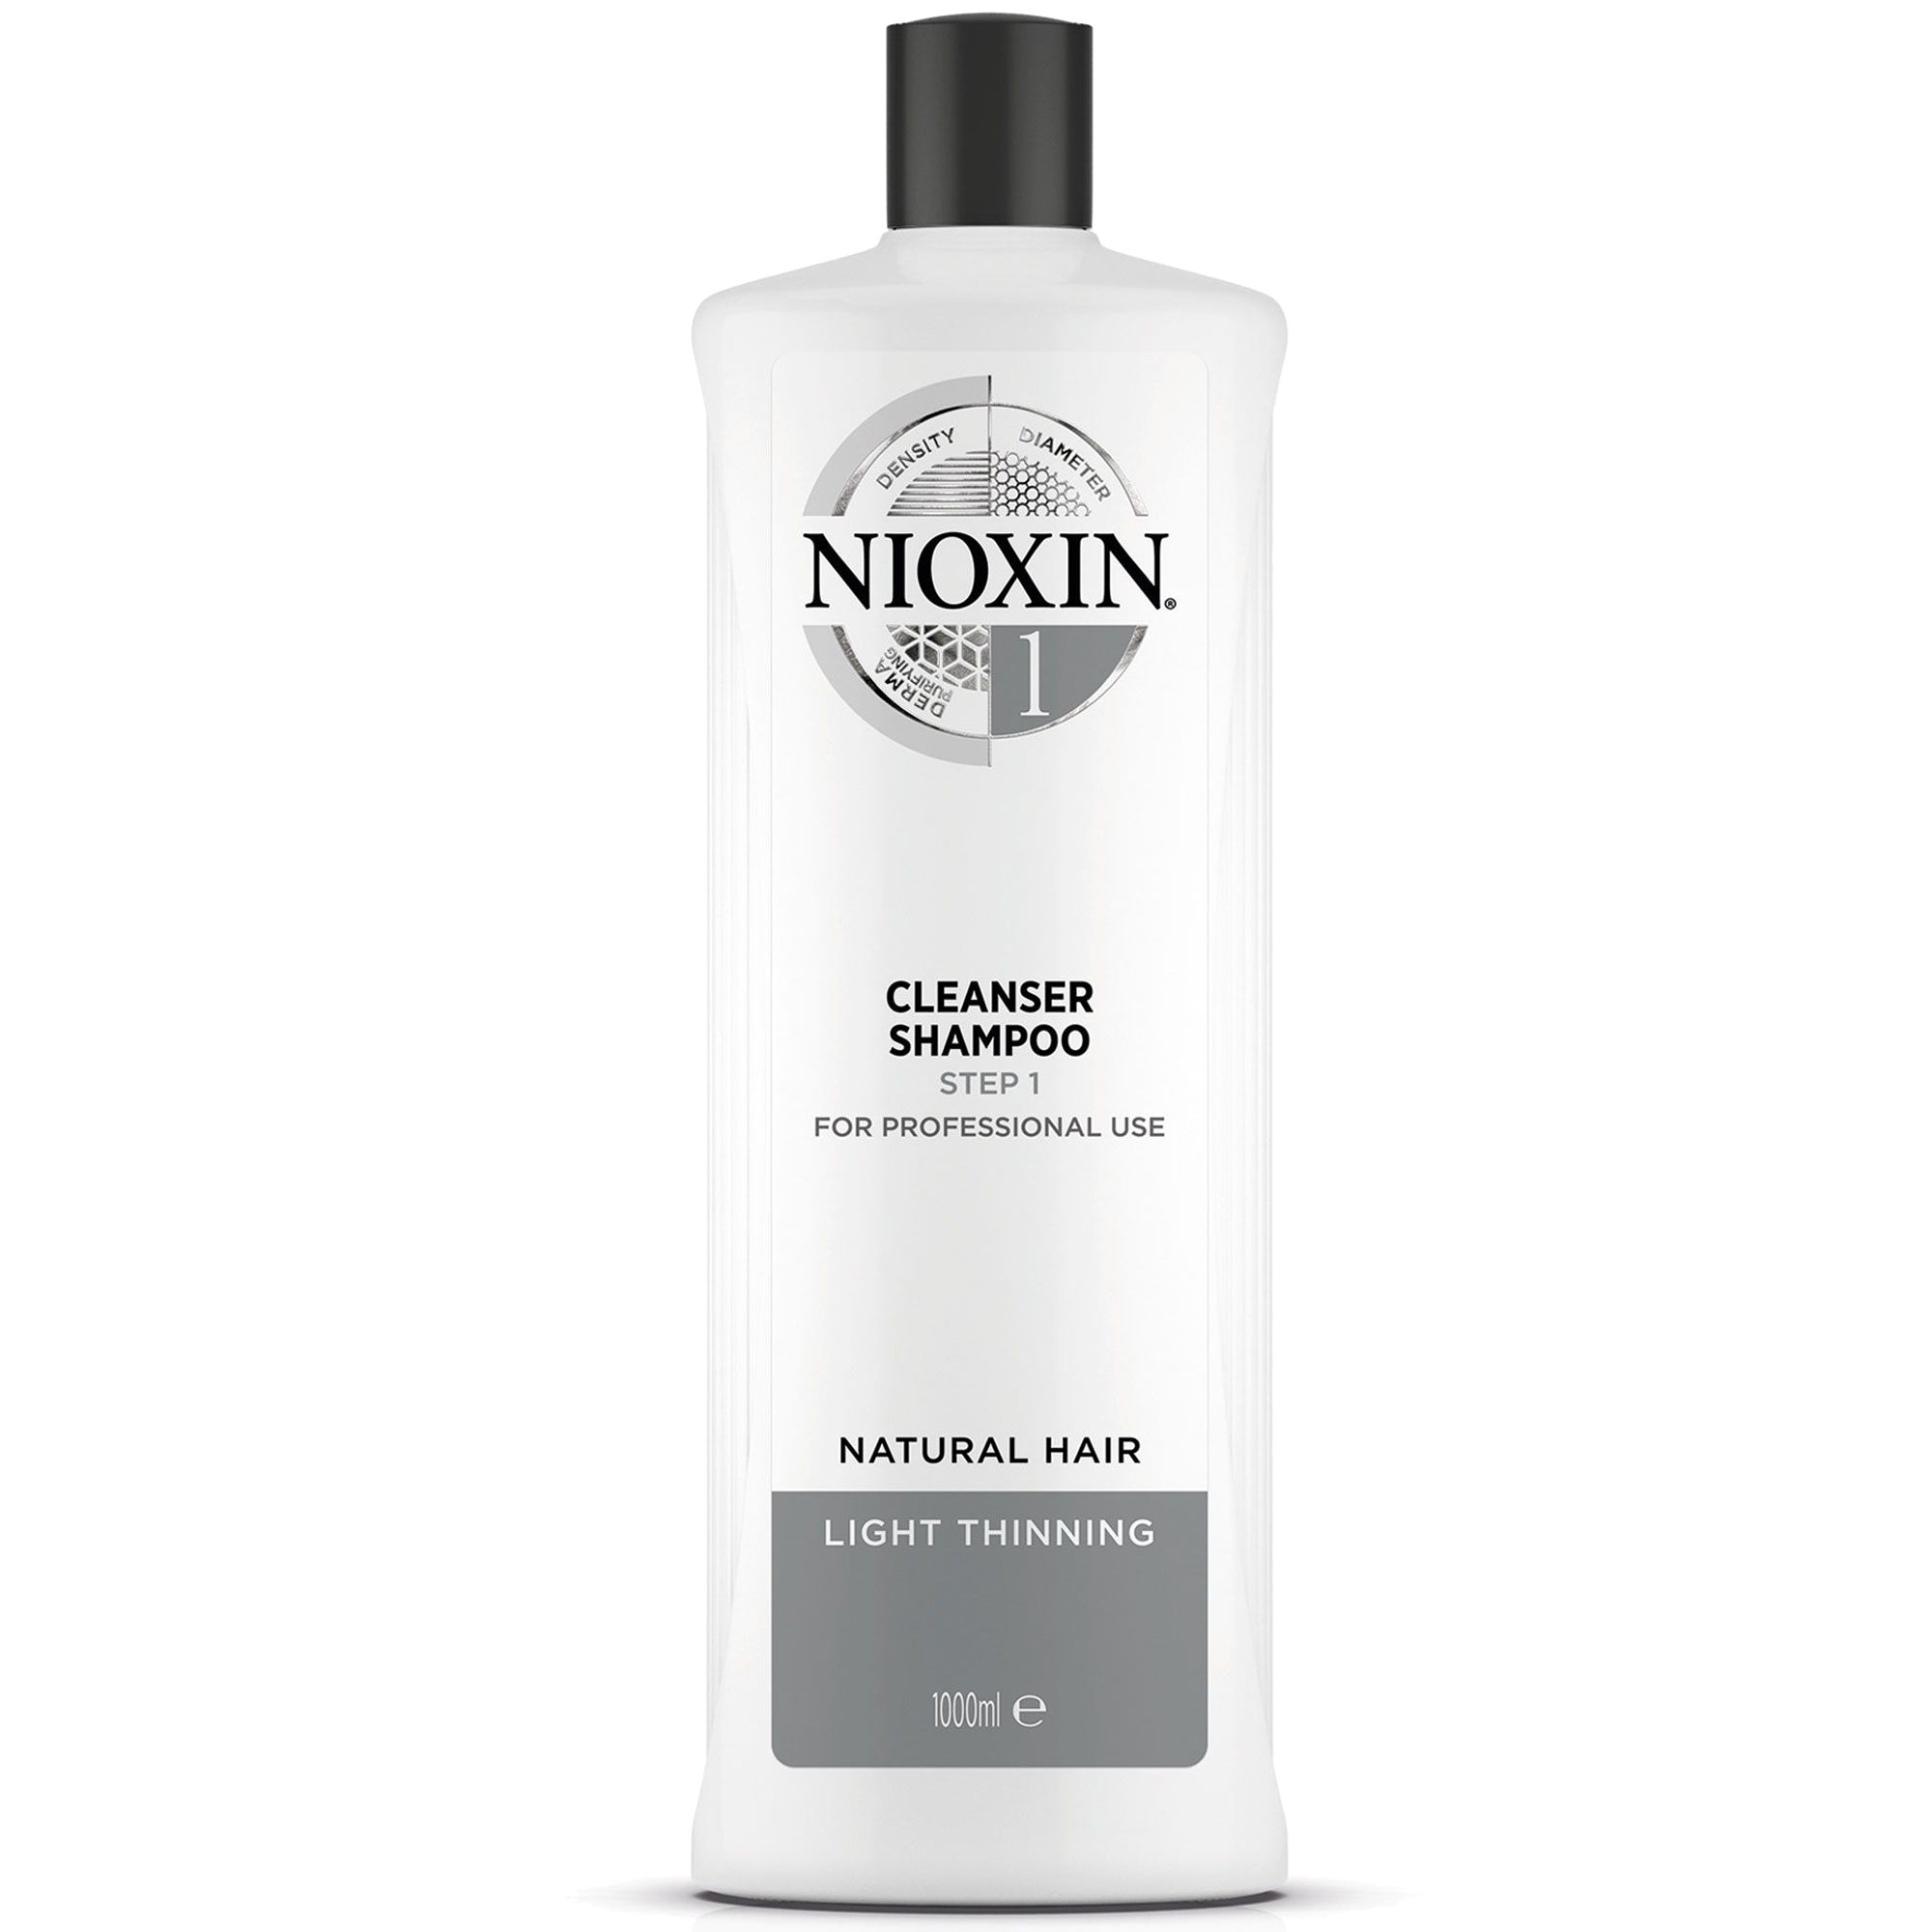 System shampoo. Nioxin шампунь System 3 Cleanser 1000 ml. Nioxin шампунь System 3 Cleanser Step 1, 300 мл. Шампунь Nioxin Cleanser System 5 1000 мл. Nioxin очищающий шампунь (система 1) 300мл.